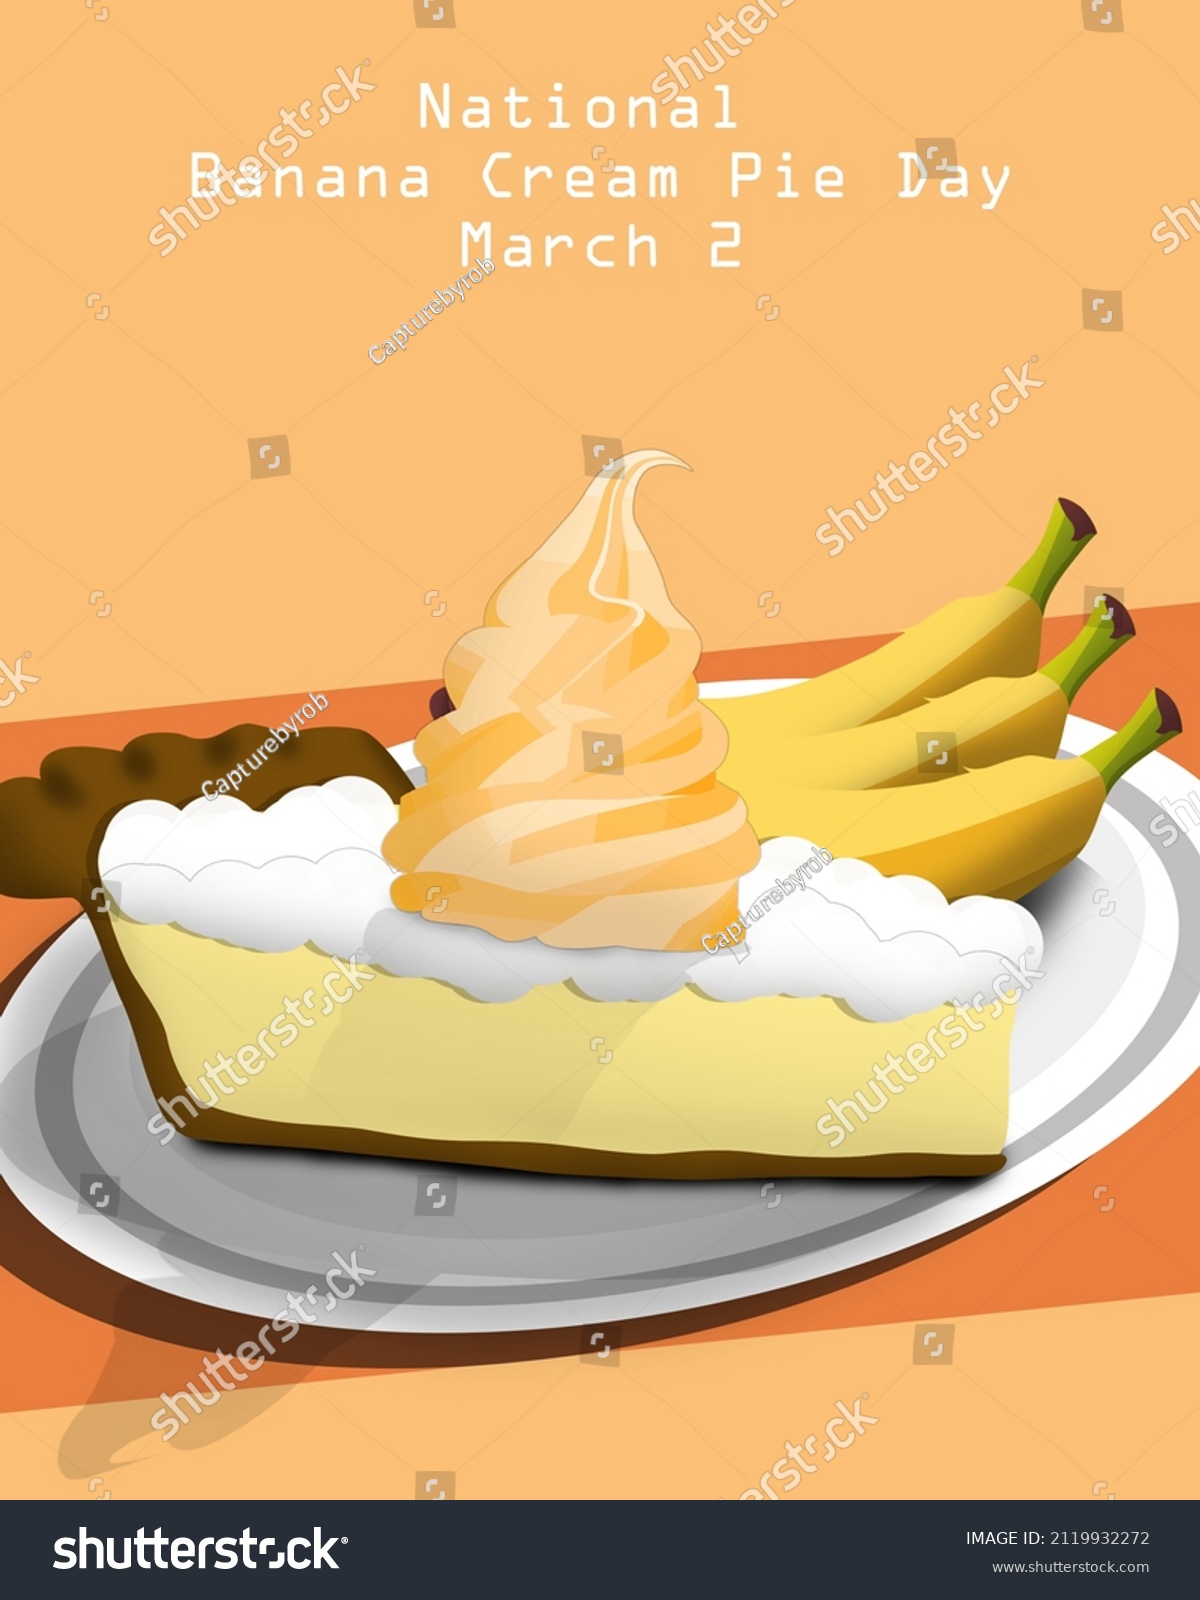 bob winger add photo banana cream cake comics